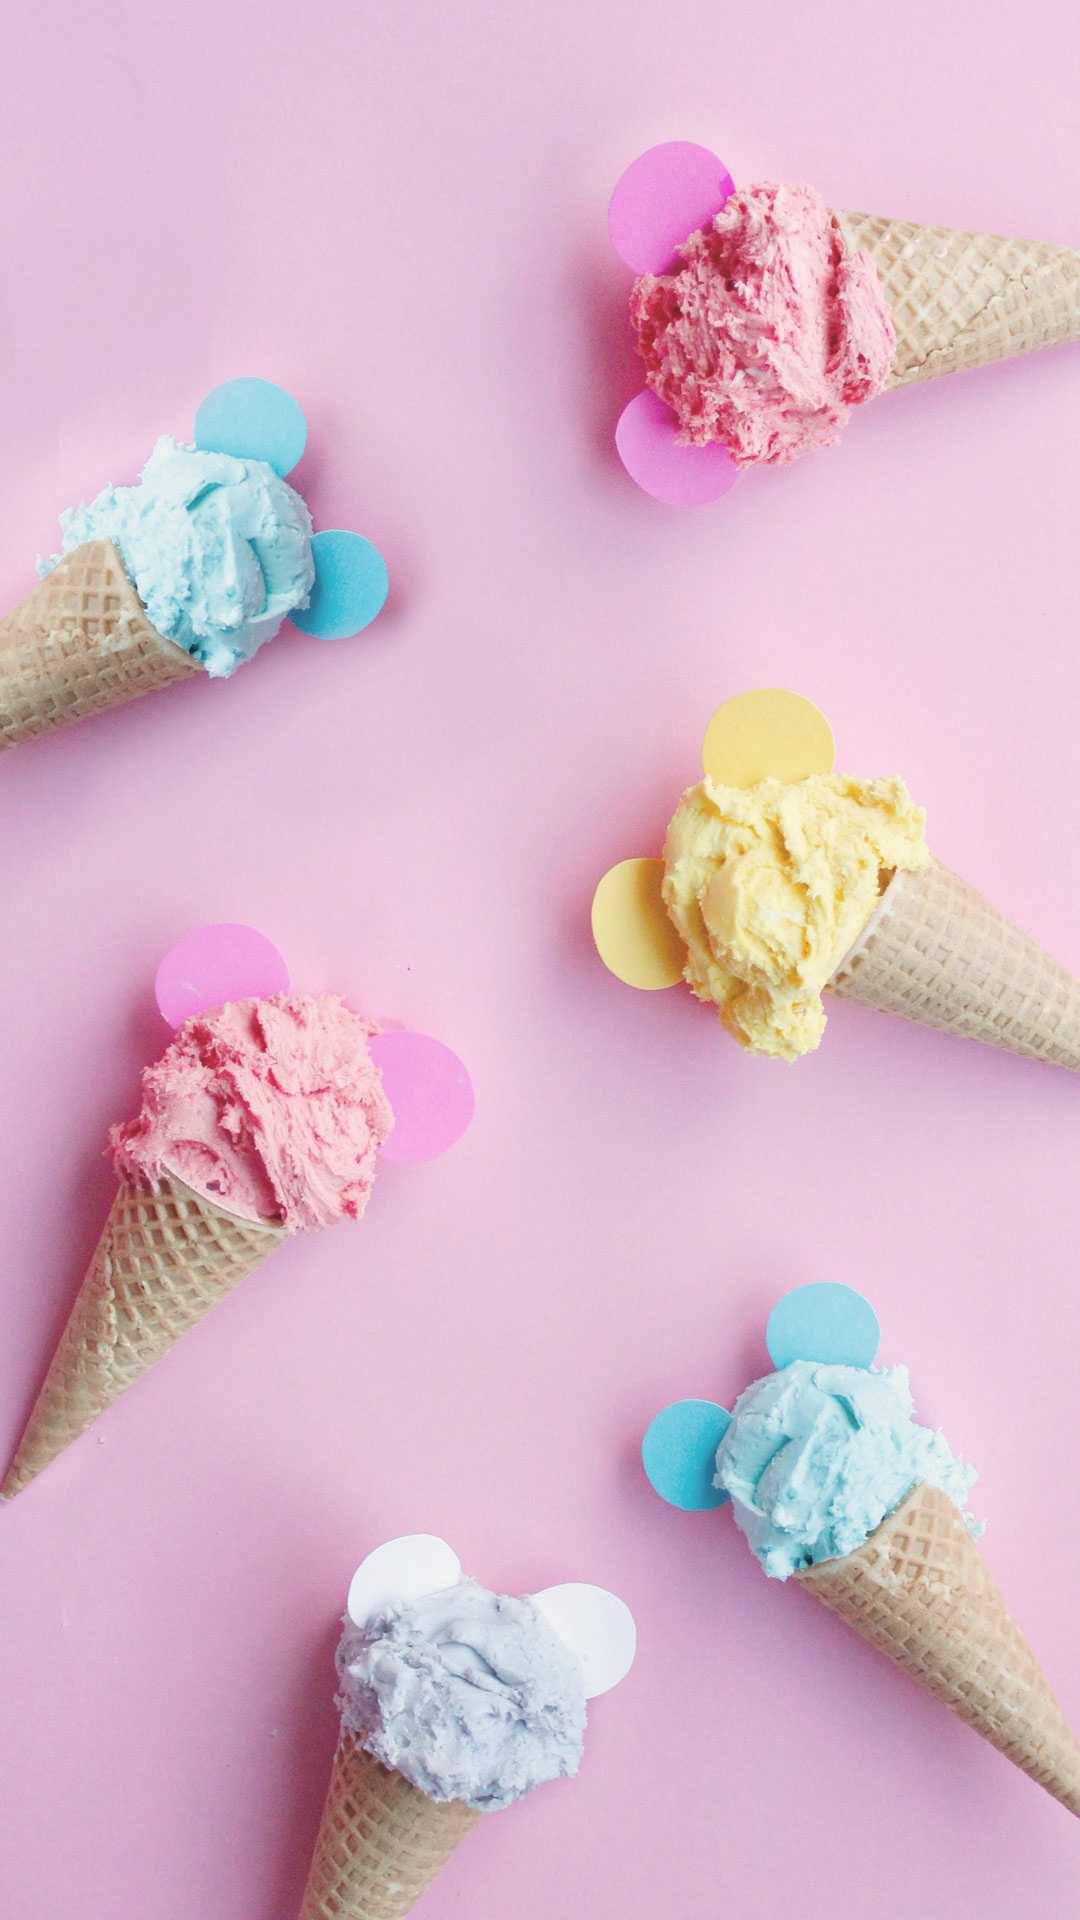 Ice Cream Wallpaper 1